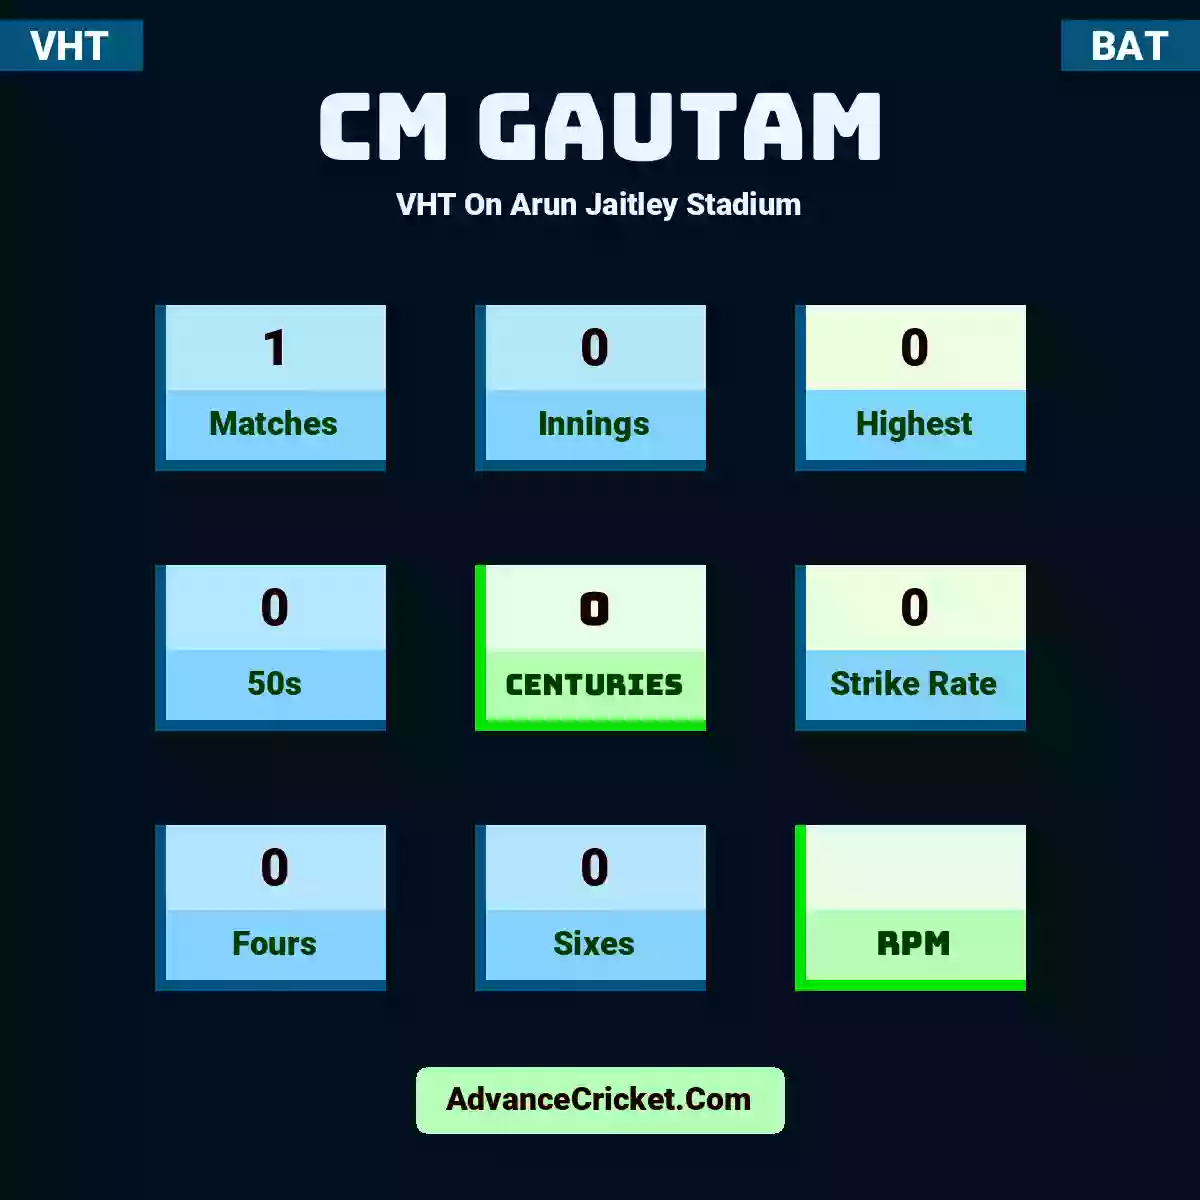 CM Gautam VHT  On Arun Jaitley Stadium, CM Gautam played 1 matches, scored 0 runs as highest, 0 half-centuries, and 0 centuries, with a strike rate of 0. C.Gautam hit 0 fours and 0 sixes.